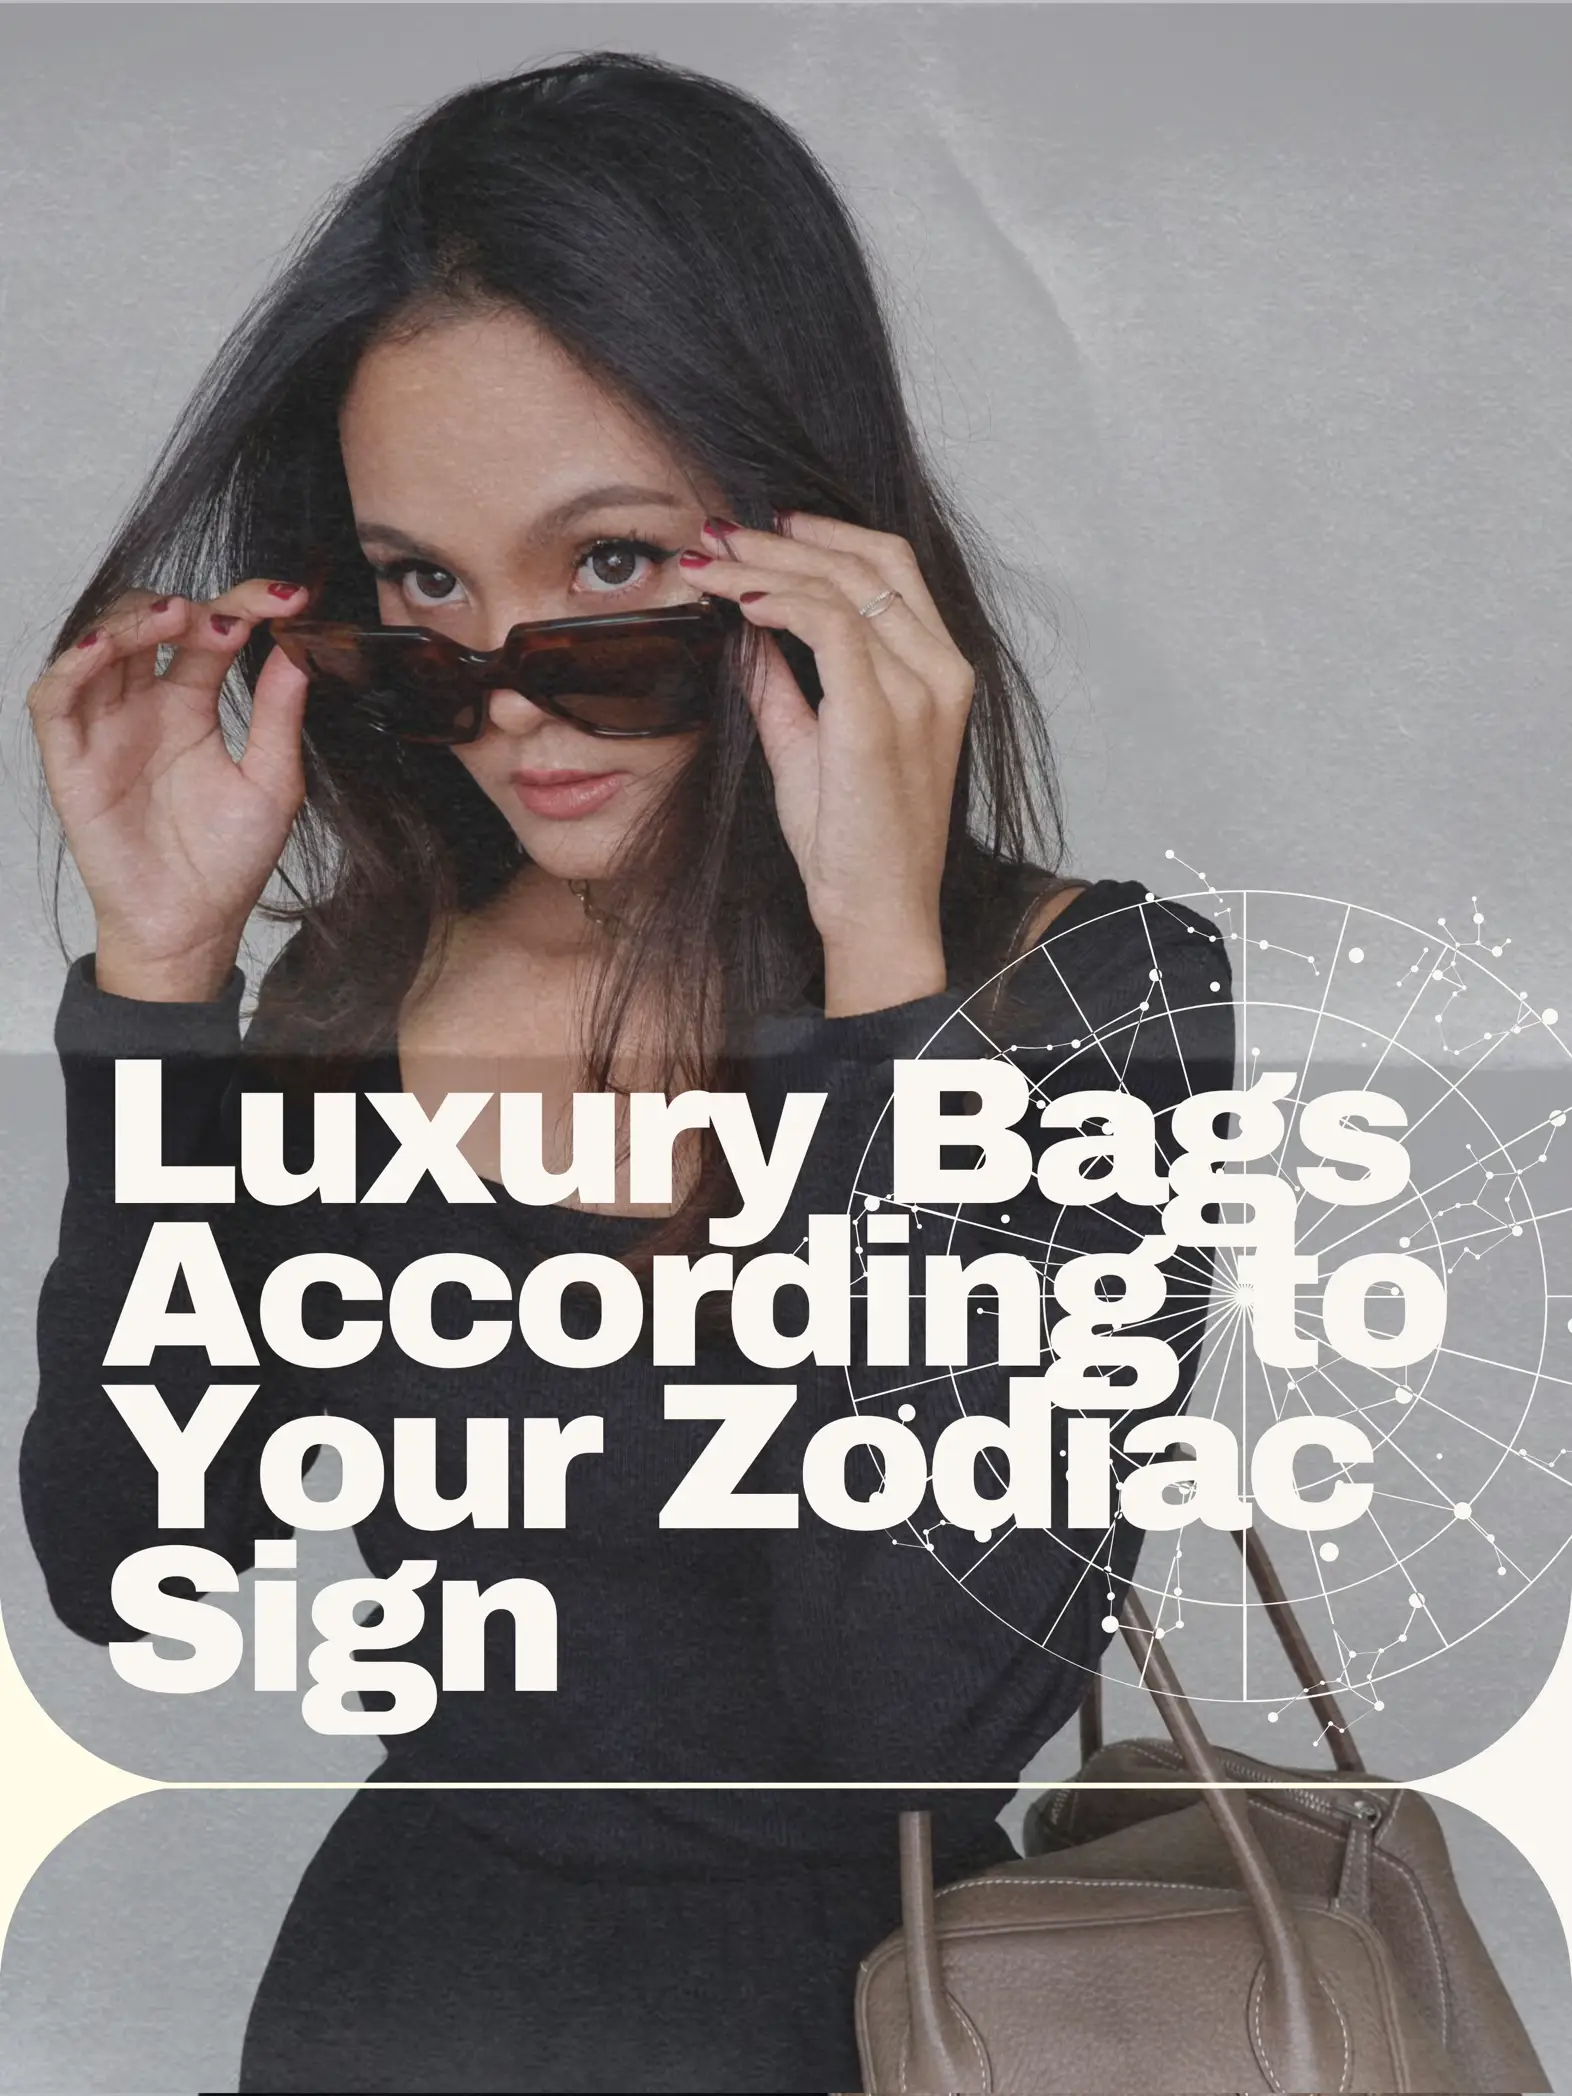 Luxury Bags According to Your Zodiac Sign, Galeri disiarkan oleh  Natasshanjani